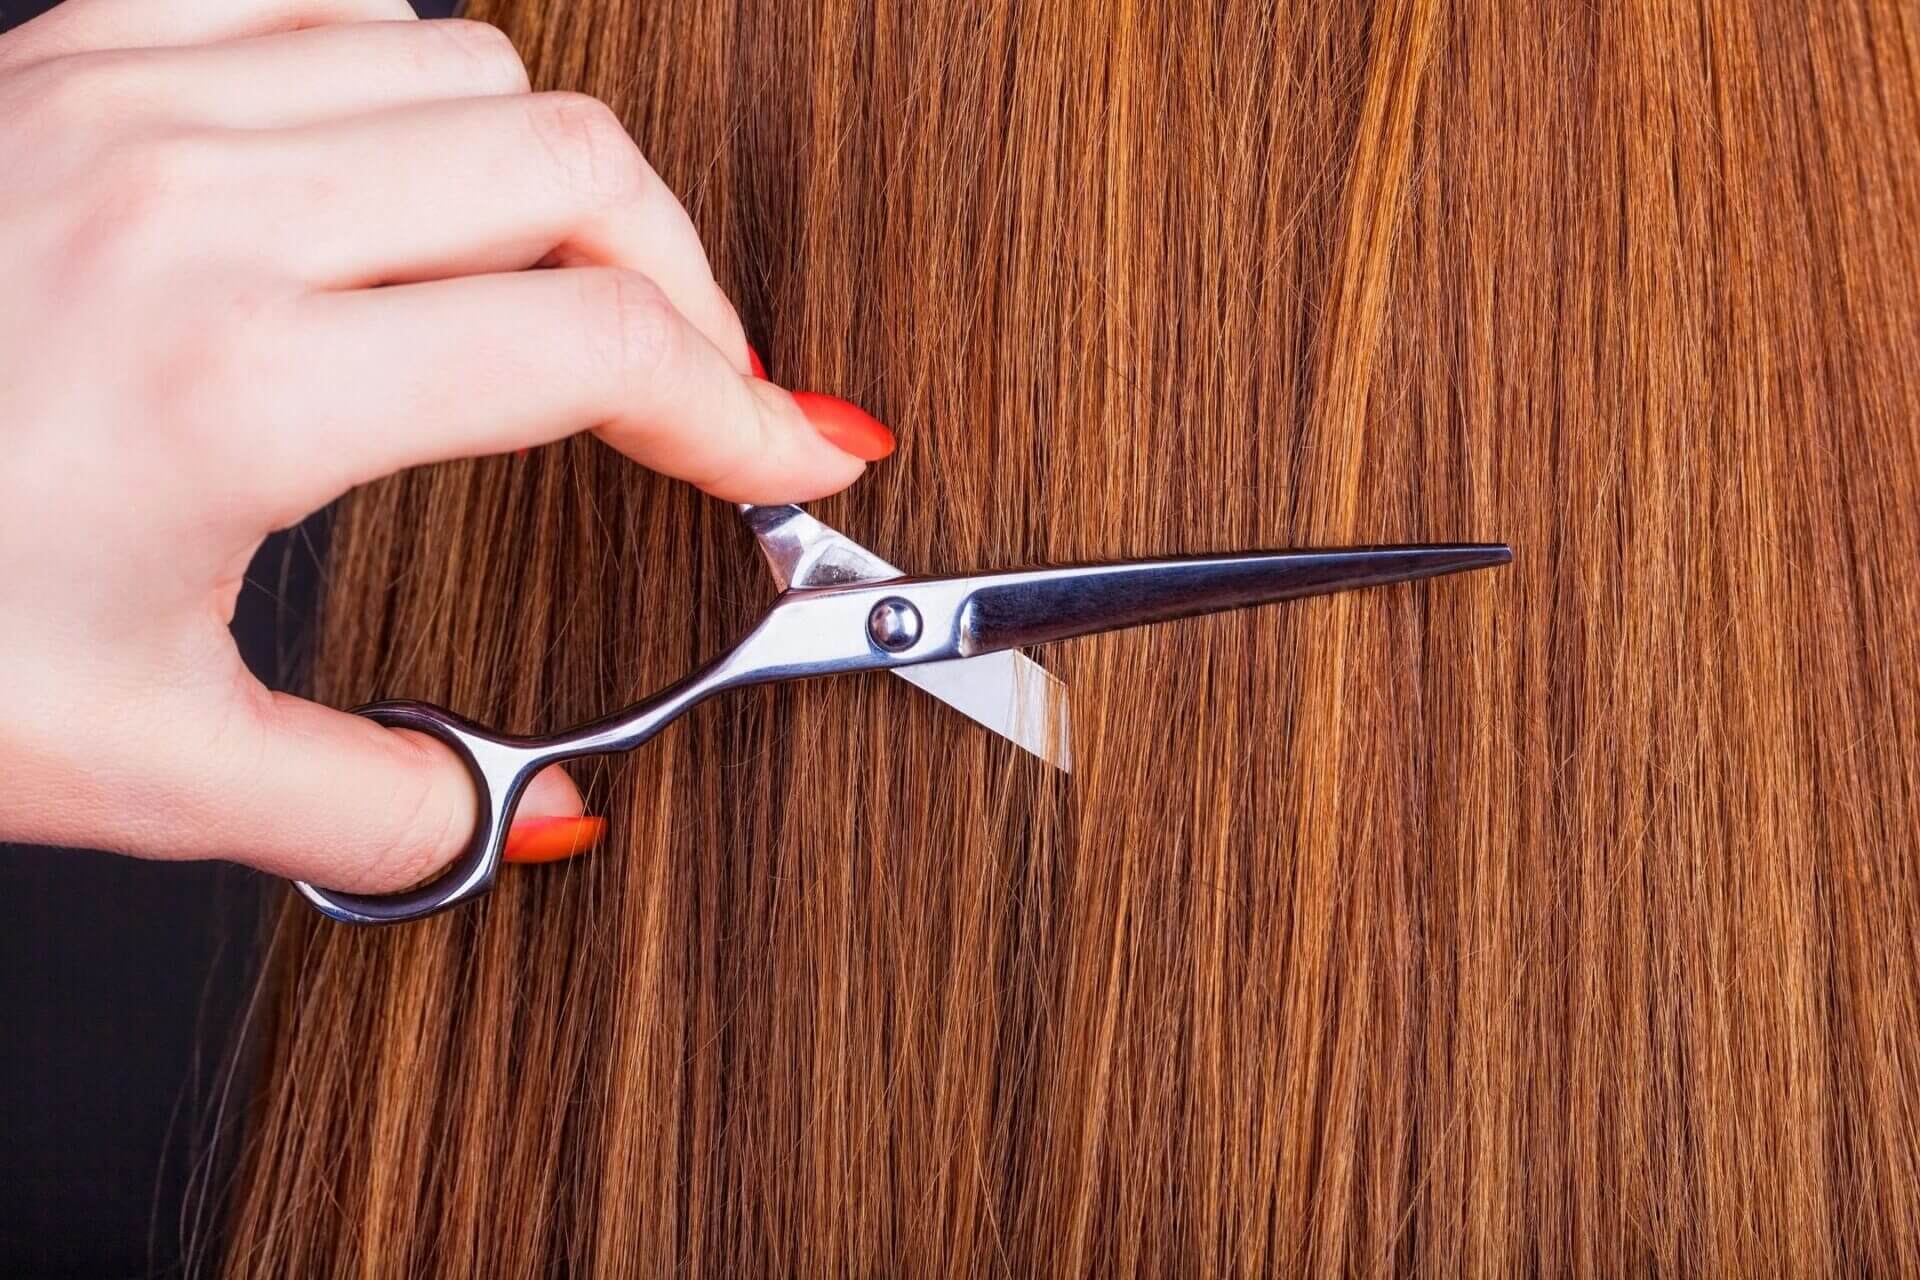 Closeup shot of a hand cutting hair with scissors